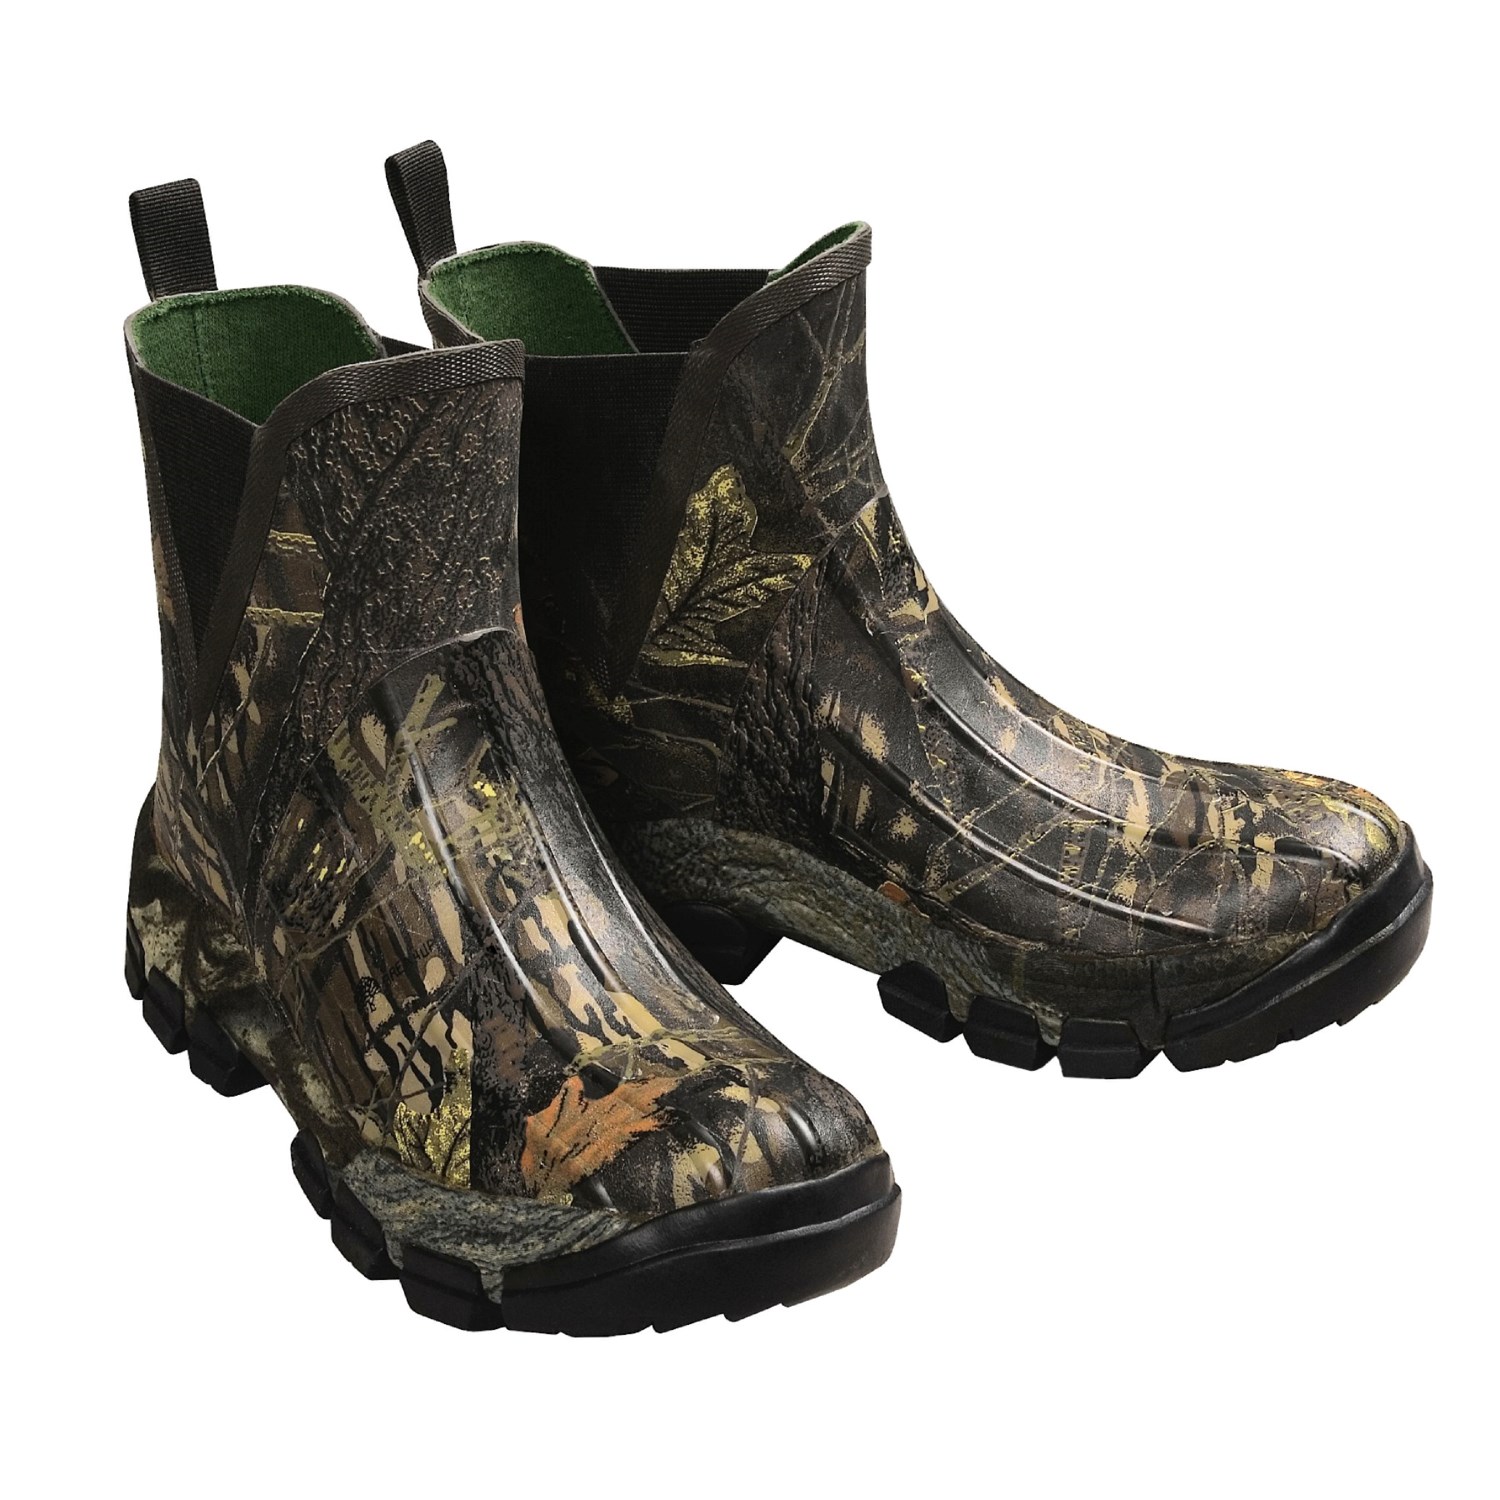 Itasca Swampwalker Mini Boots (For Men) 18106 - Save 50%